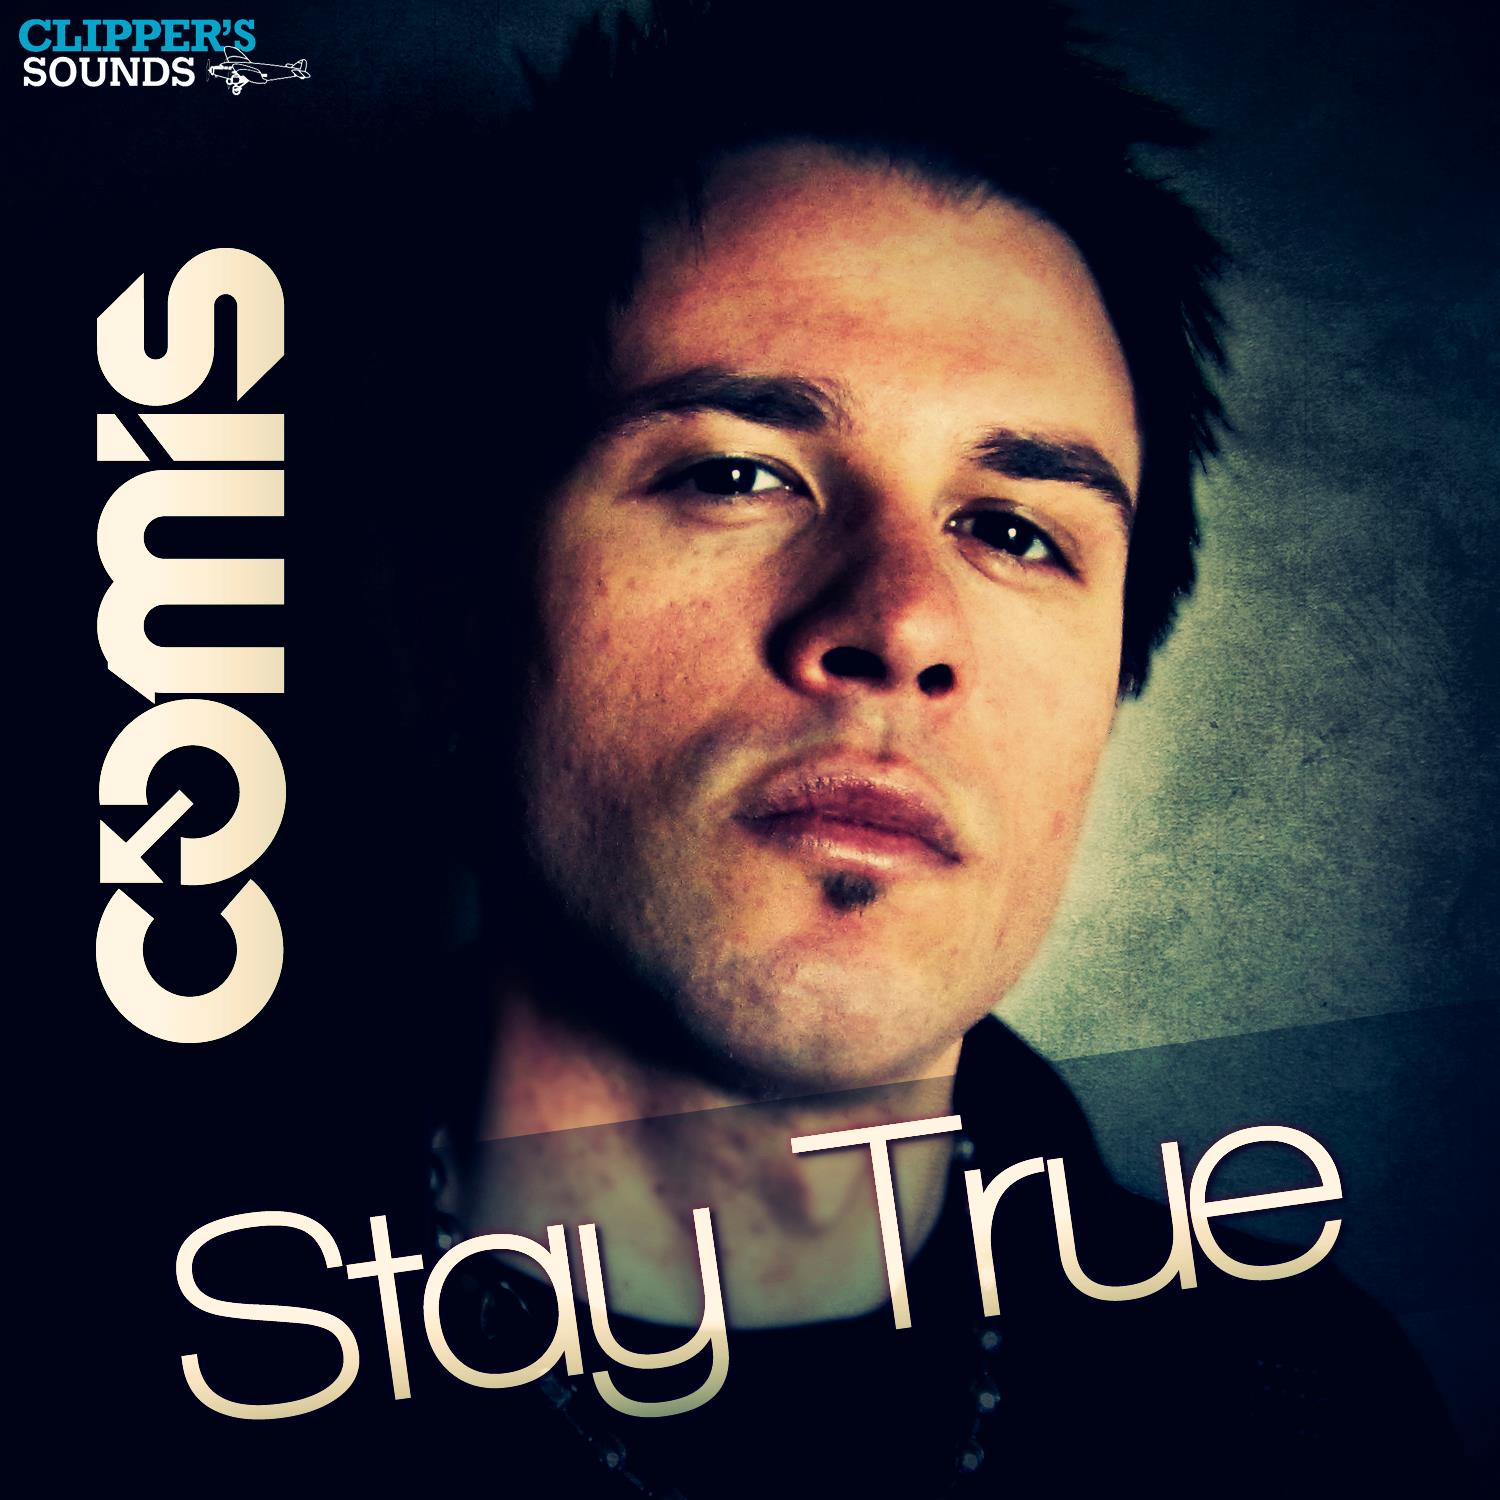 Comis - Stay True